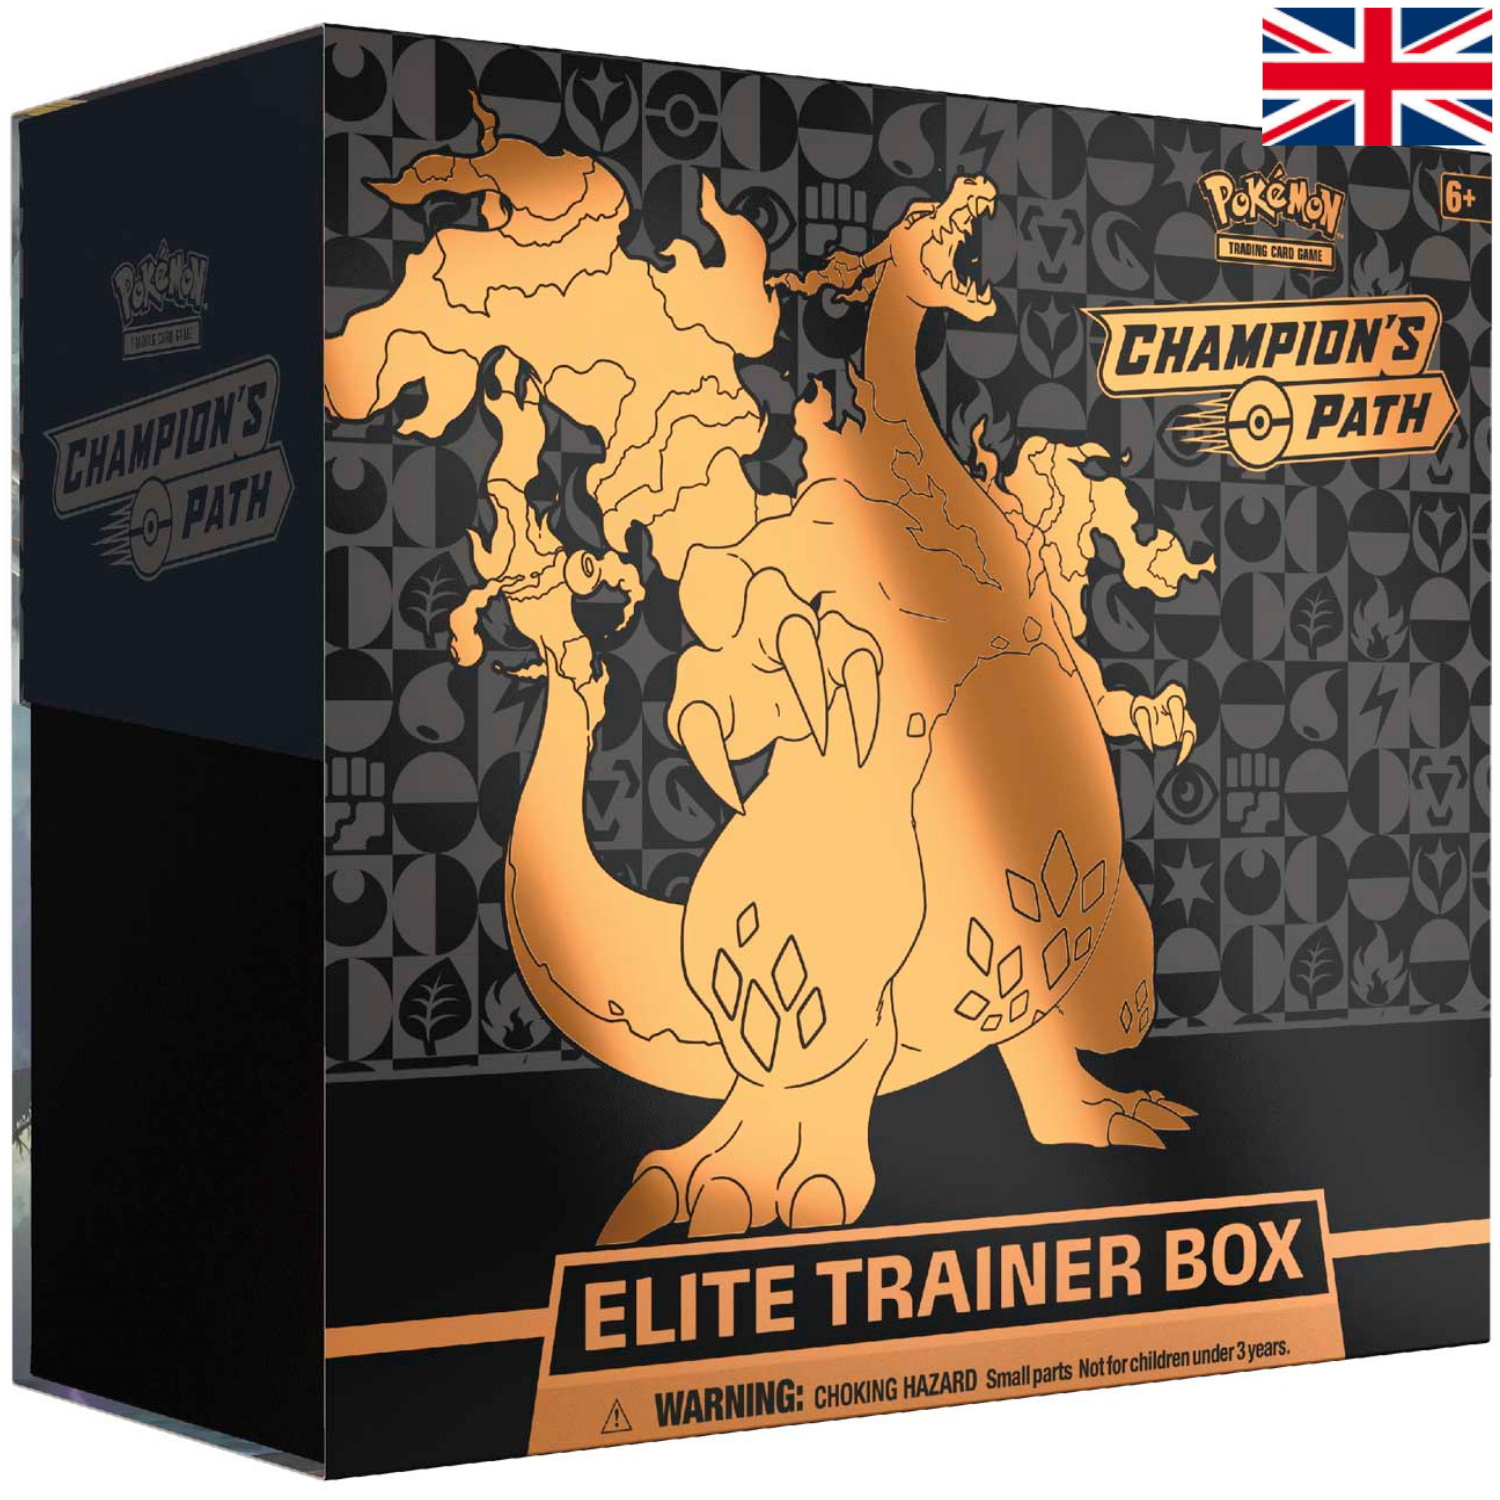 Pokémon - Champion's Path Elite Trainer Box